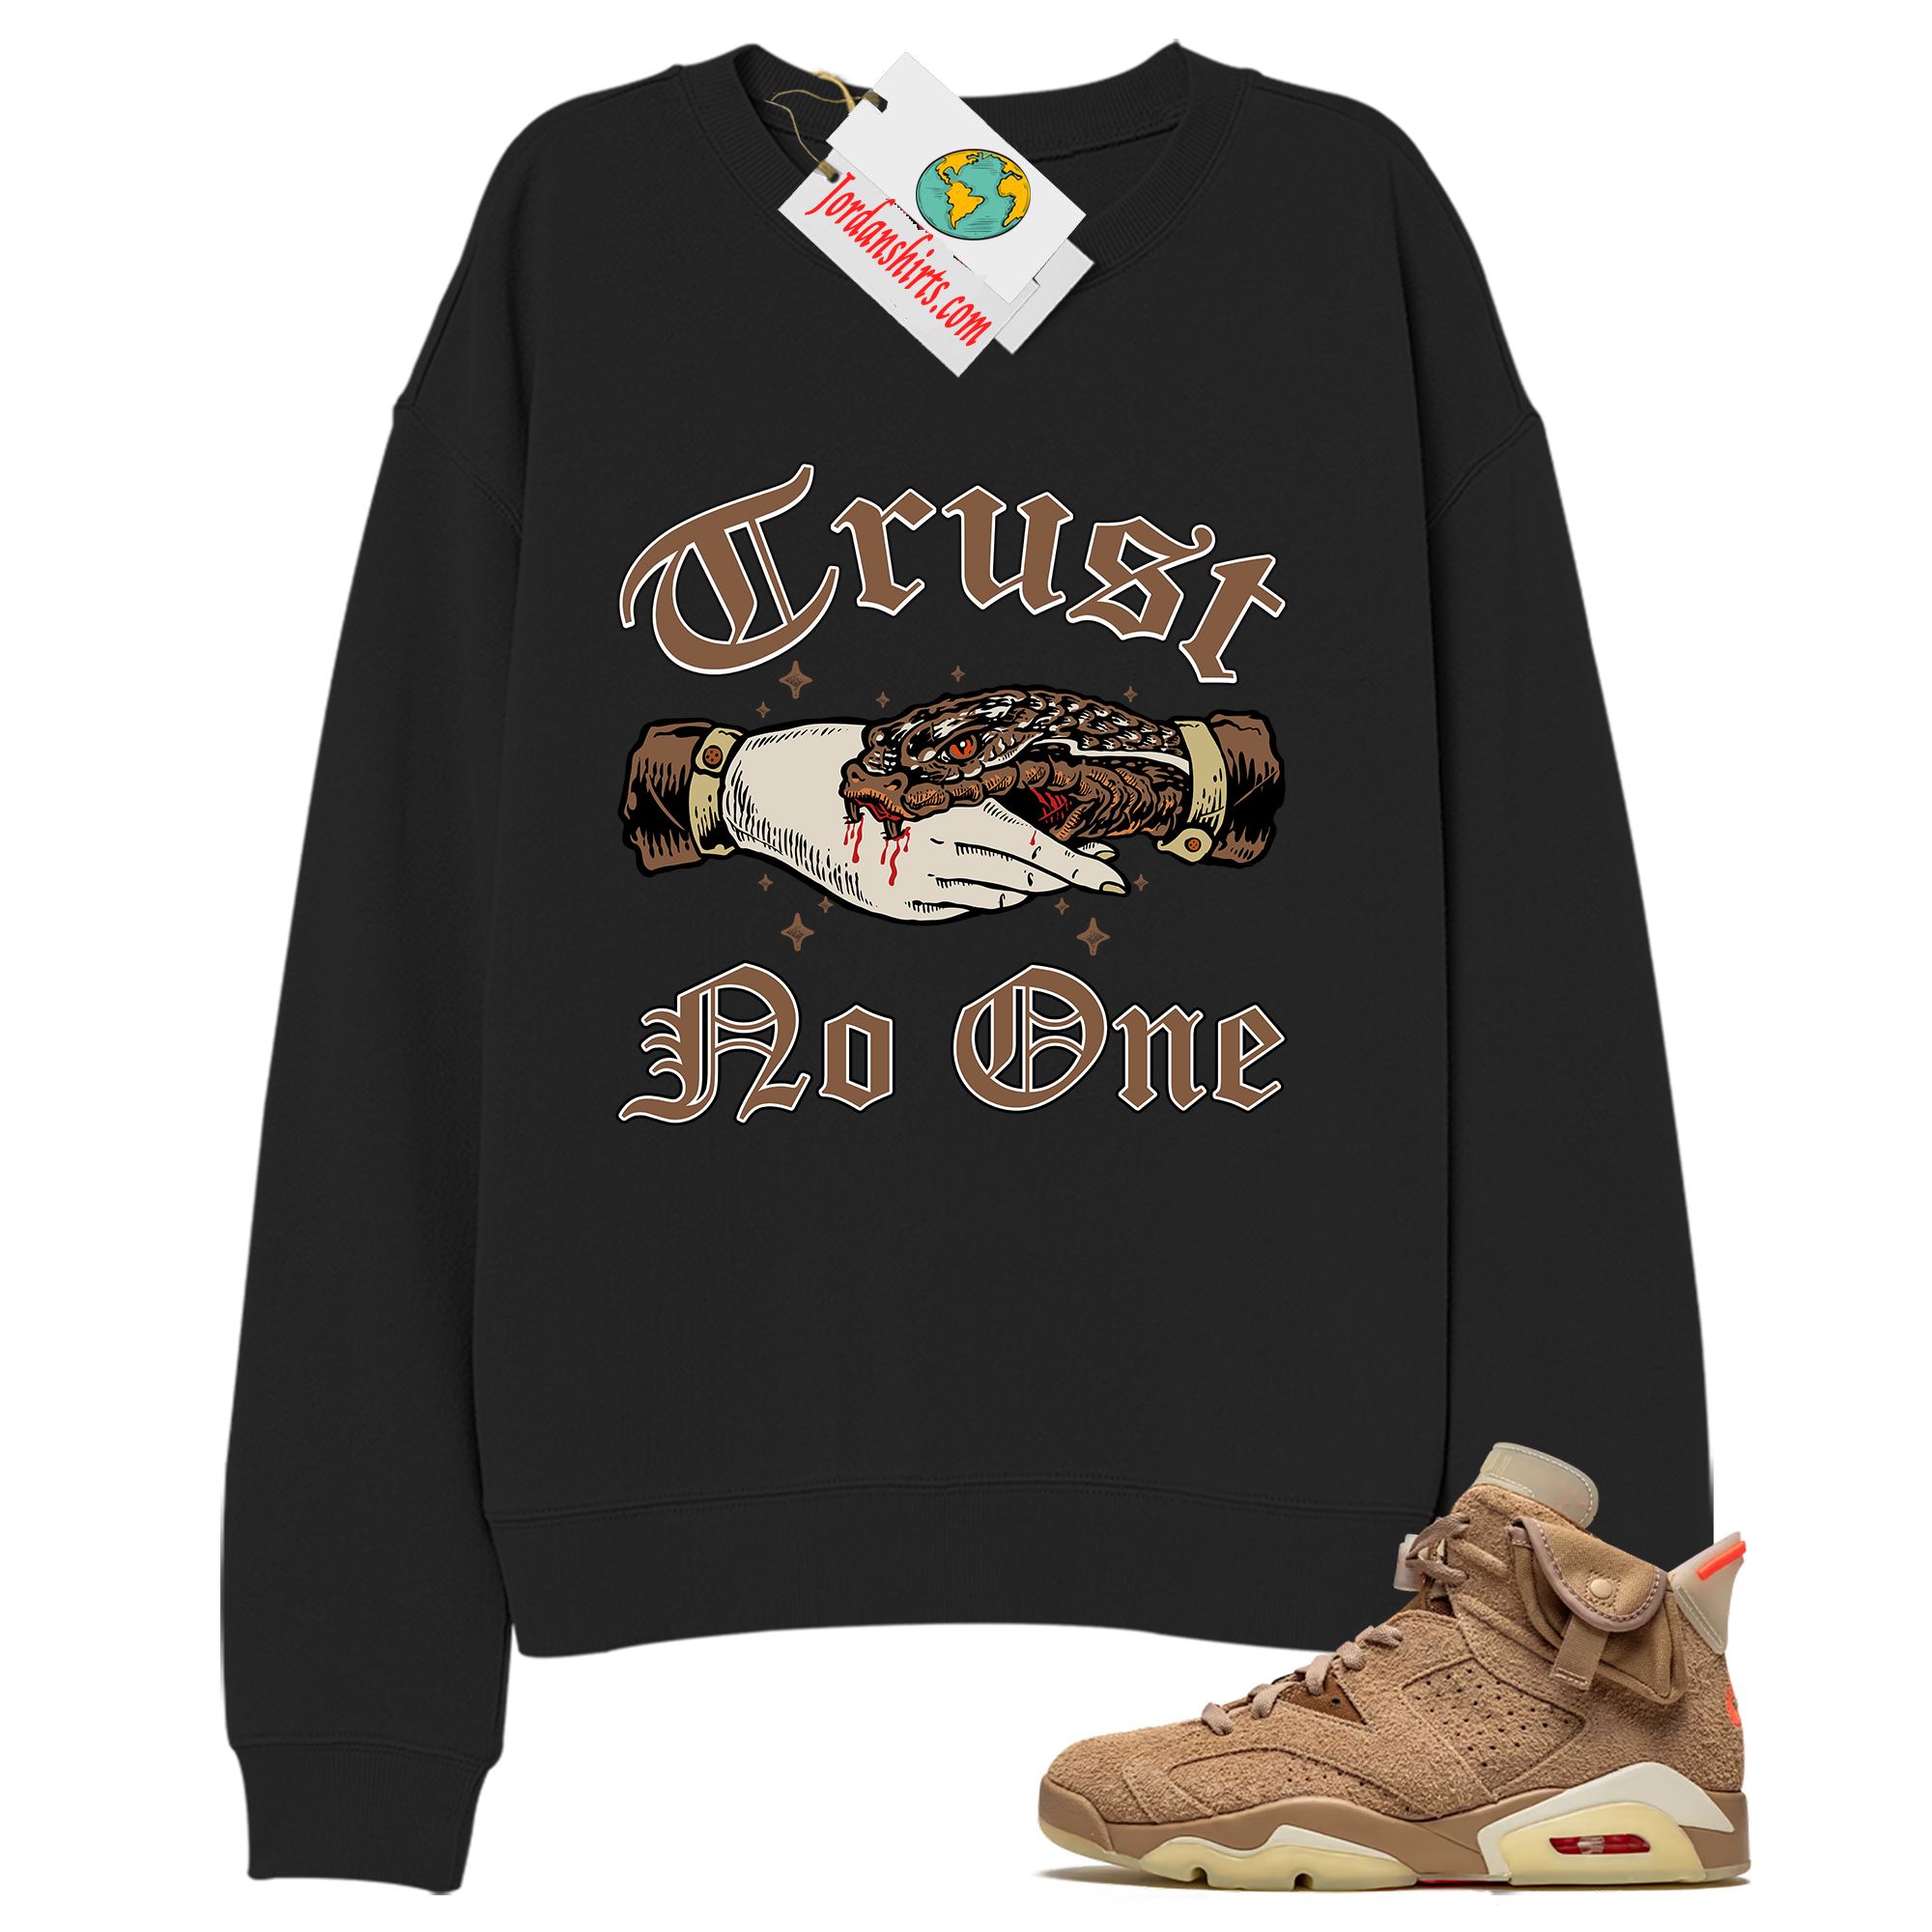 Jordan 6 Sweatshirt, Trust No One Deal With Snake Black Sweatshirt Air Jordan 6 Travis Scott 6s Plus Size Up To 5xl